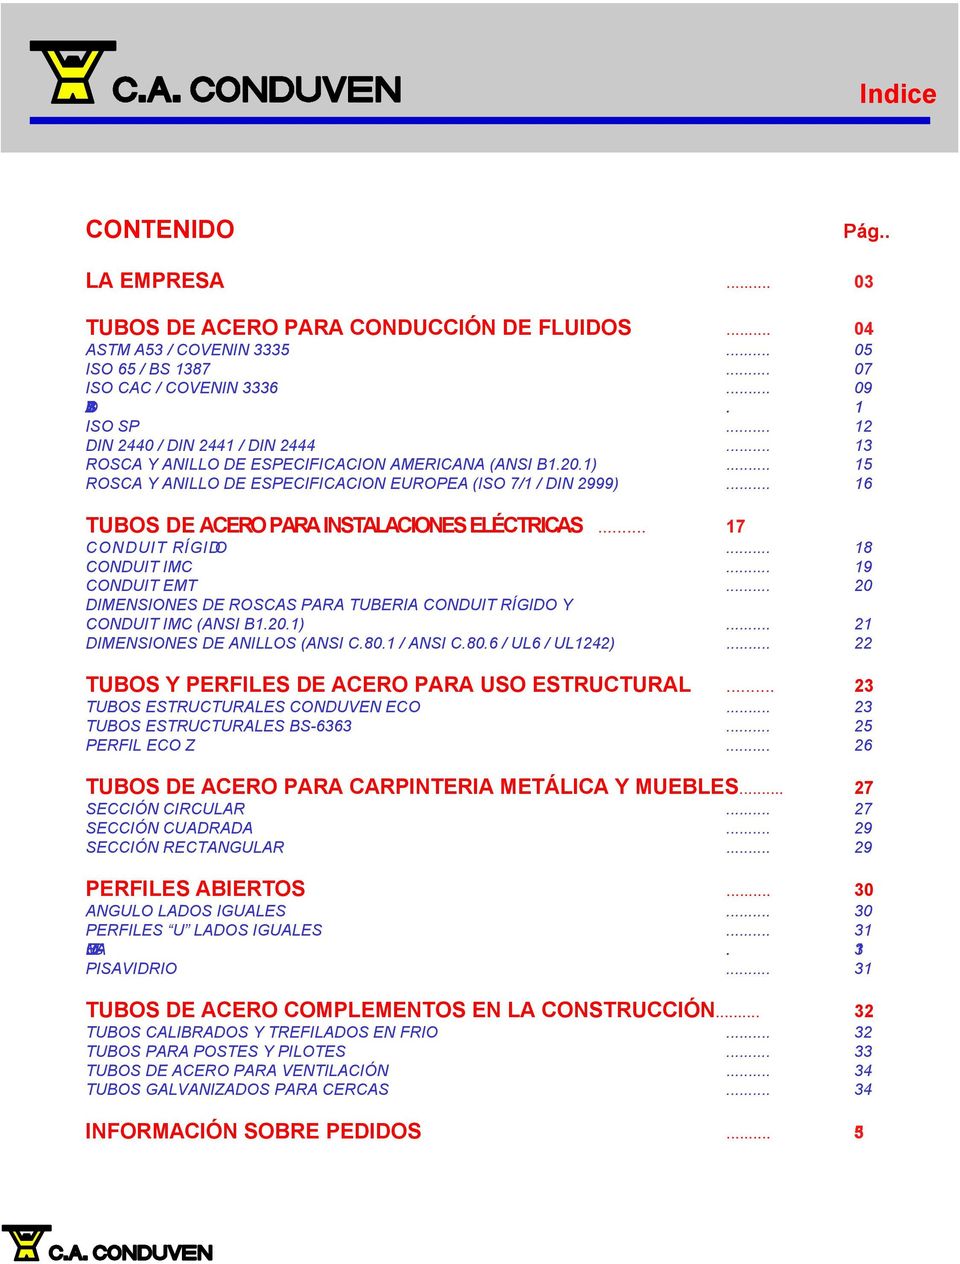 .. 16 TUBOS DE ACERO PARA INSTALACIONES ELÉCTRICAS... 17 CONDUIT RÍGIDO... 18 CONDUIT IMC... 19 CONDUIT EMT... 20 DIMENSIONES DE ROSCAS PARA TUBERIA CONDUIT RÍGIDO Y CONDUIT IMC (ANSI B1.20.1).